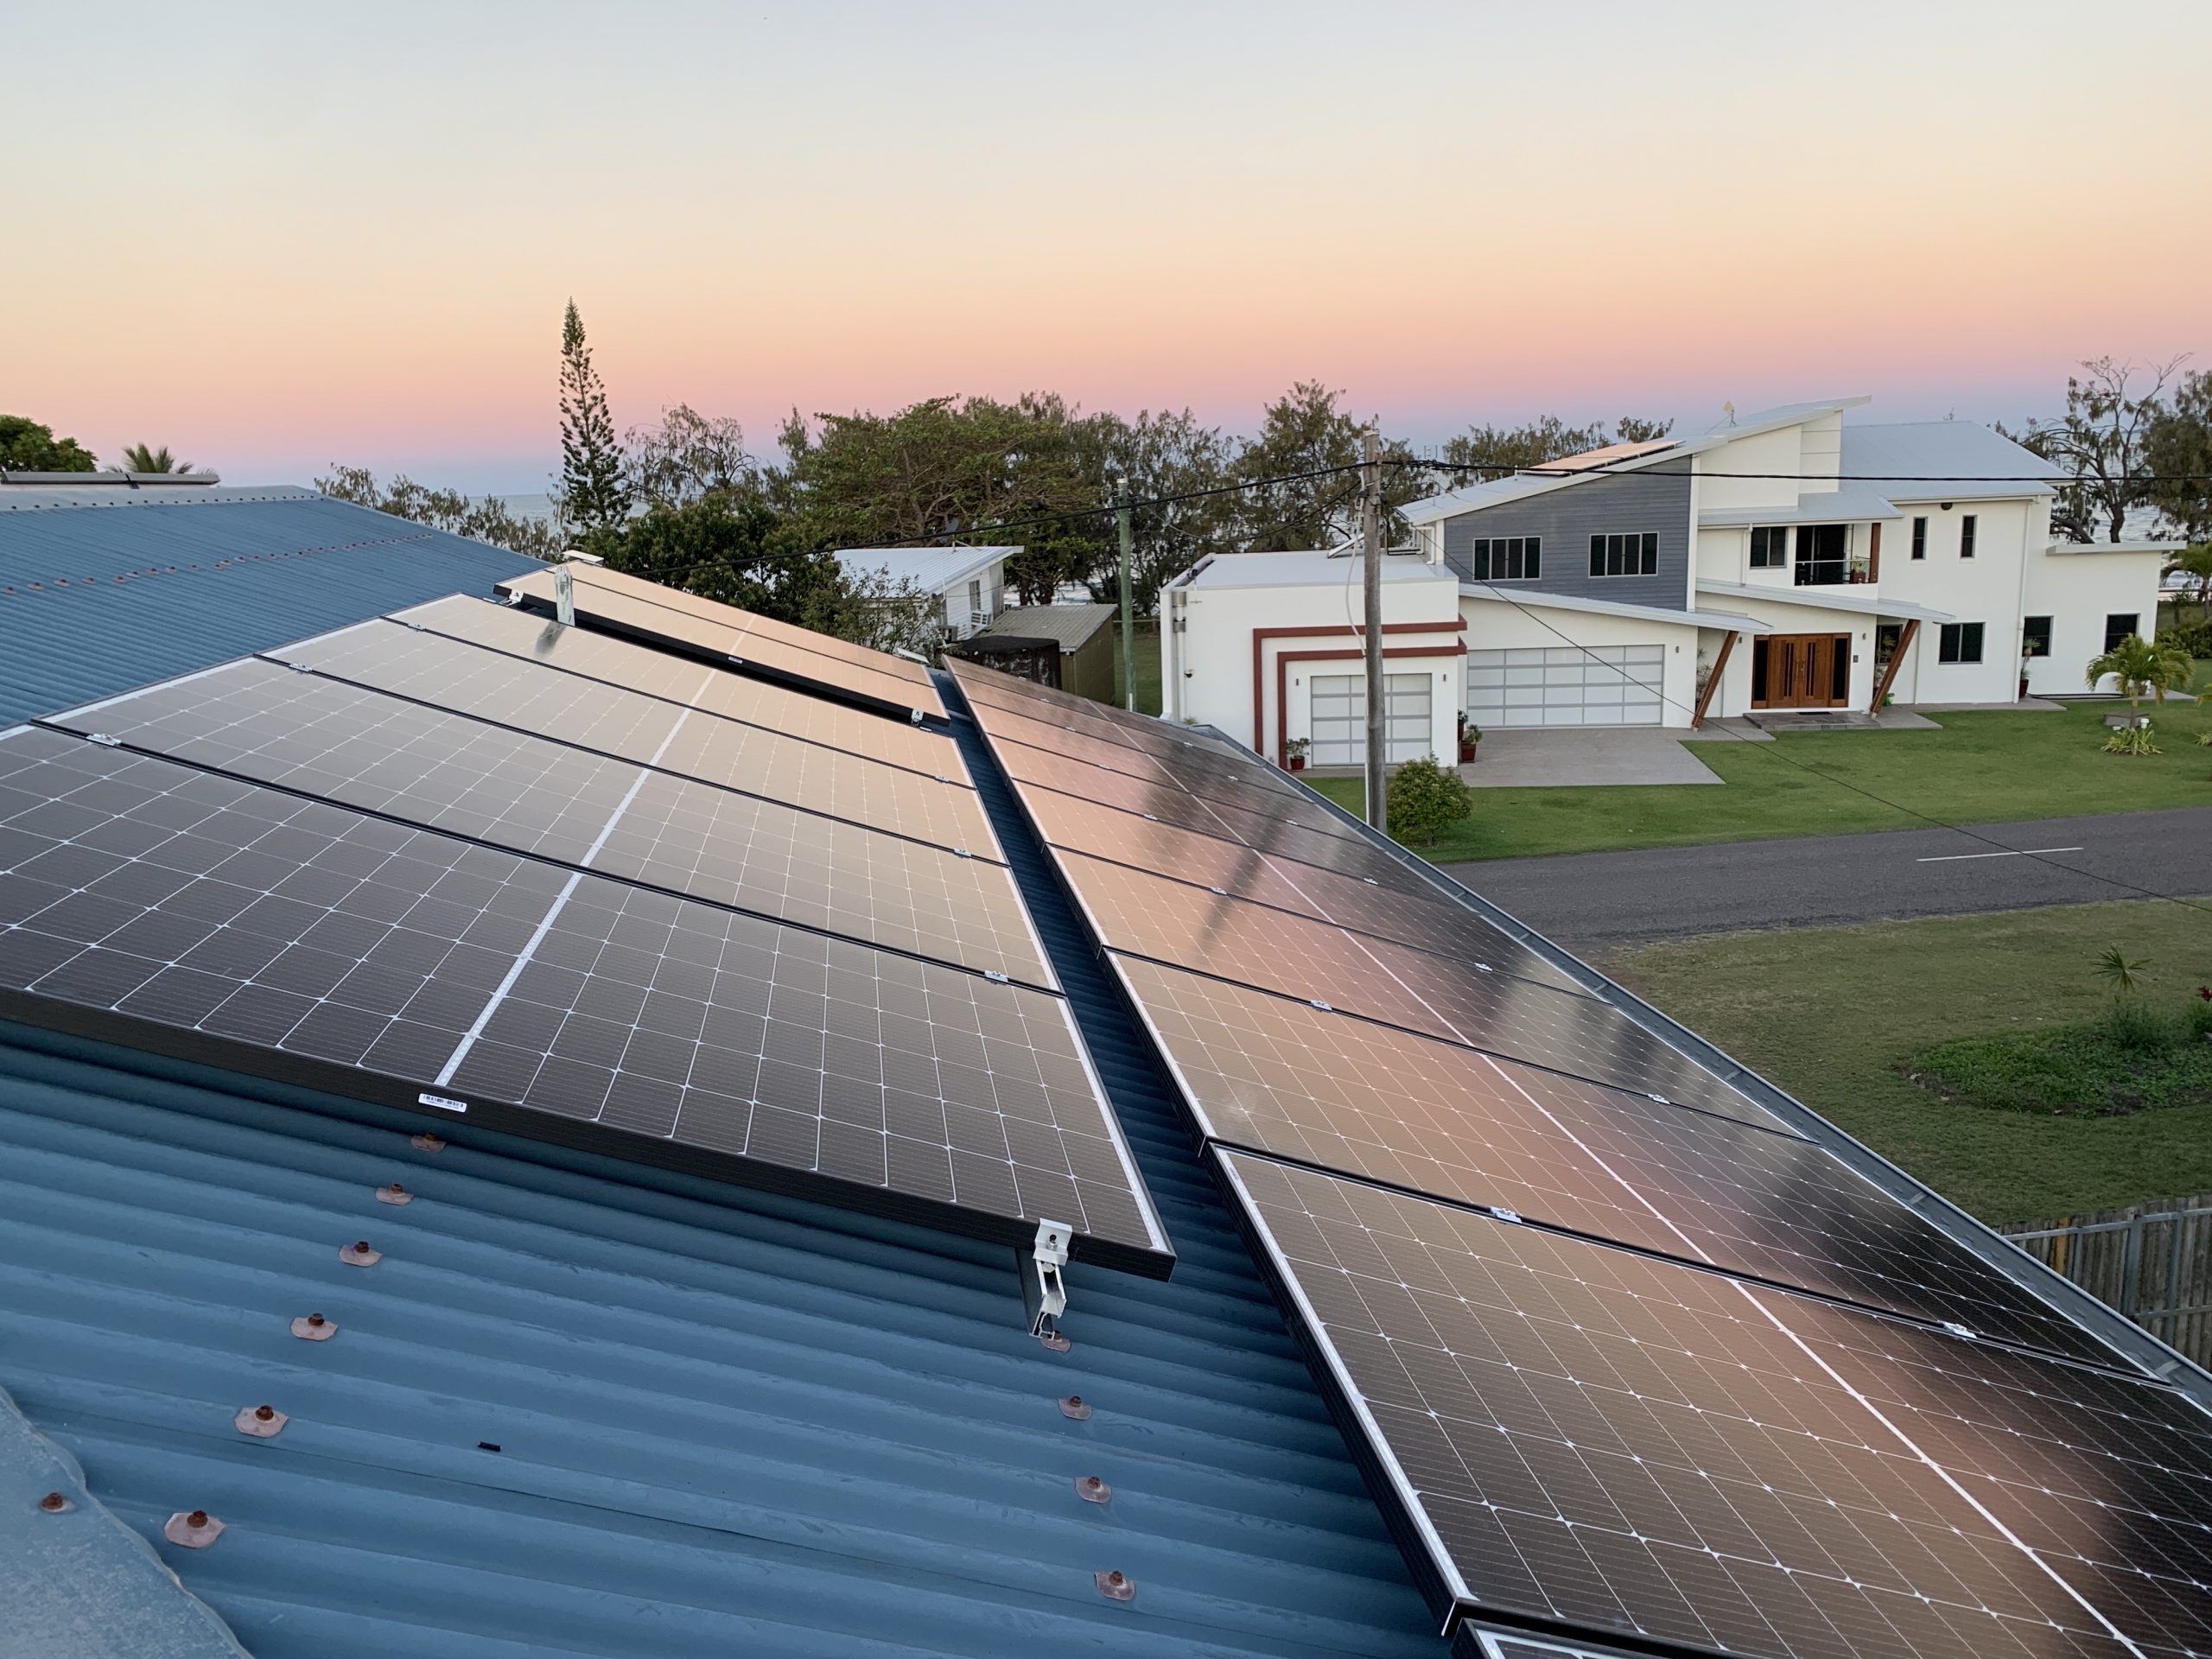 Solar Installers Gold Coast